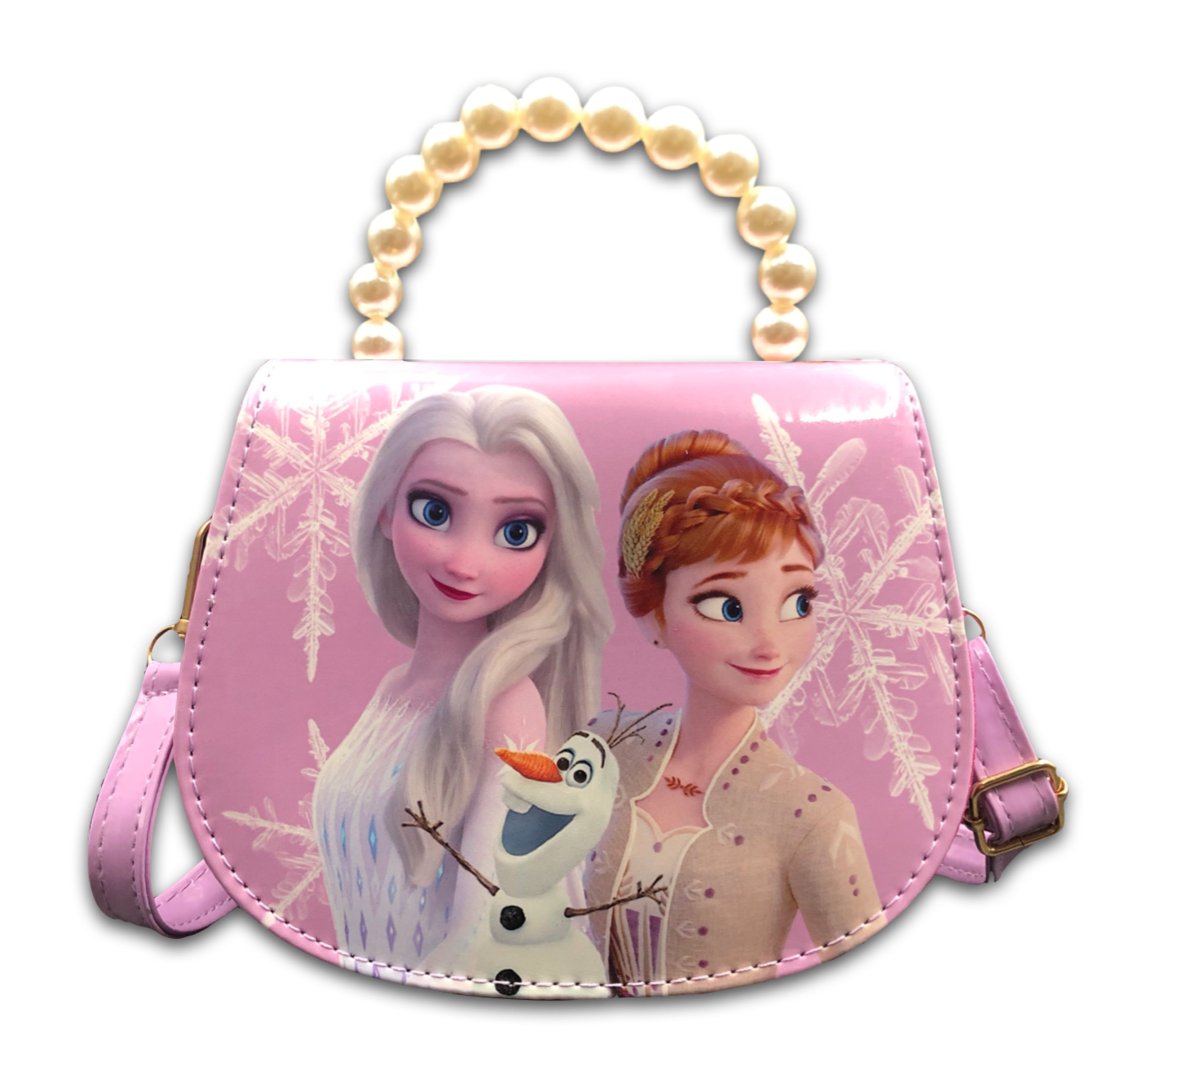 Anna Elsa Olaf Kraina Lodu torebka dla dziewczynki fioletowa FROZEN Disney + pasek